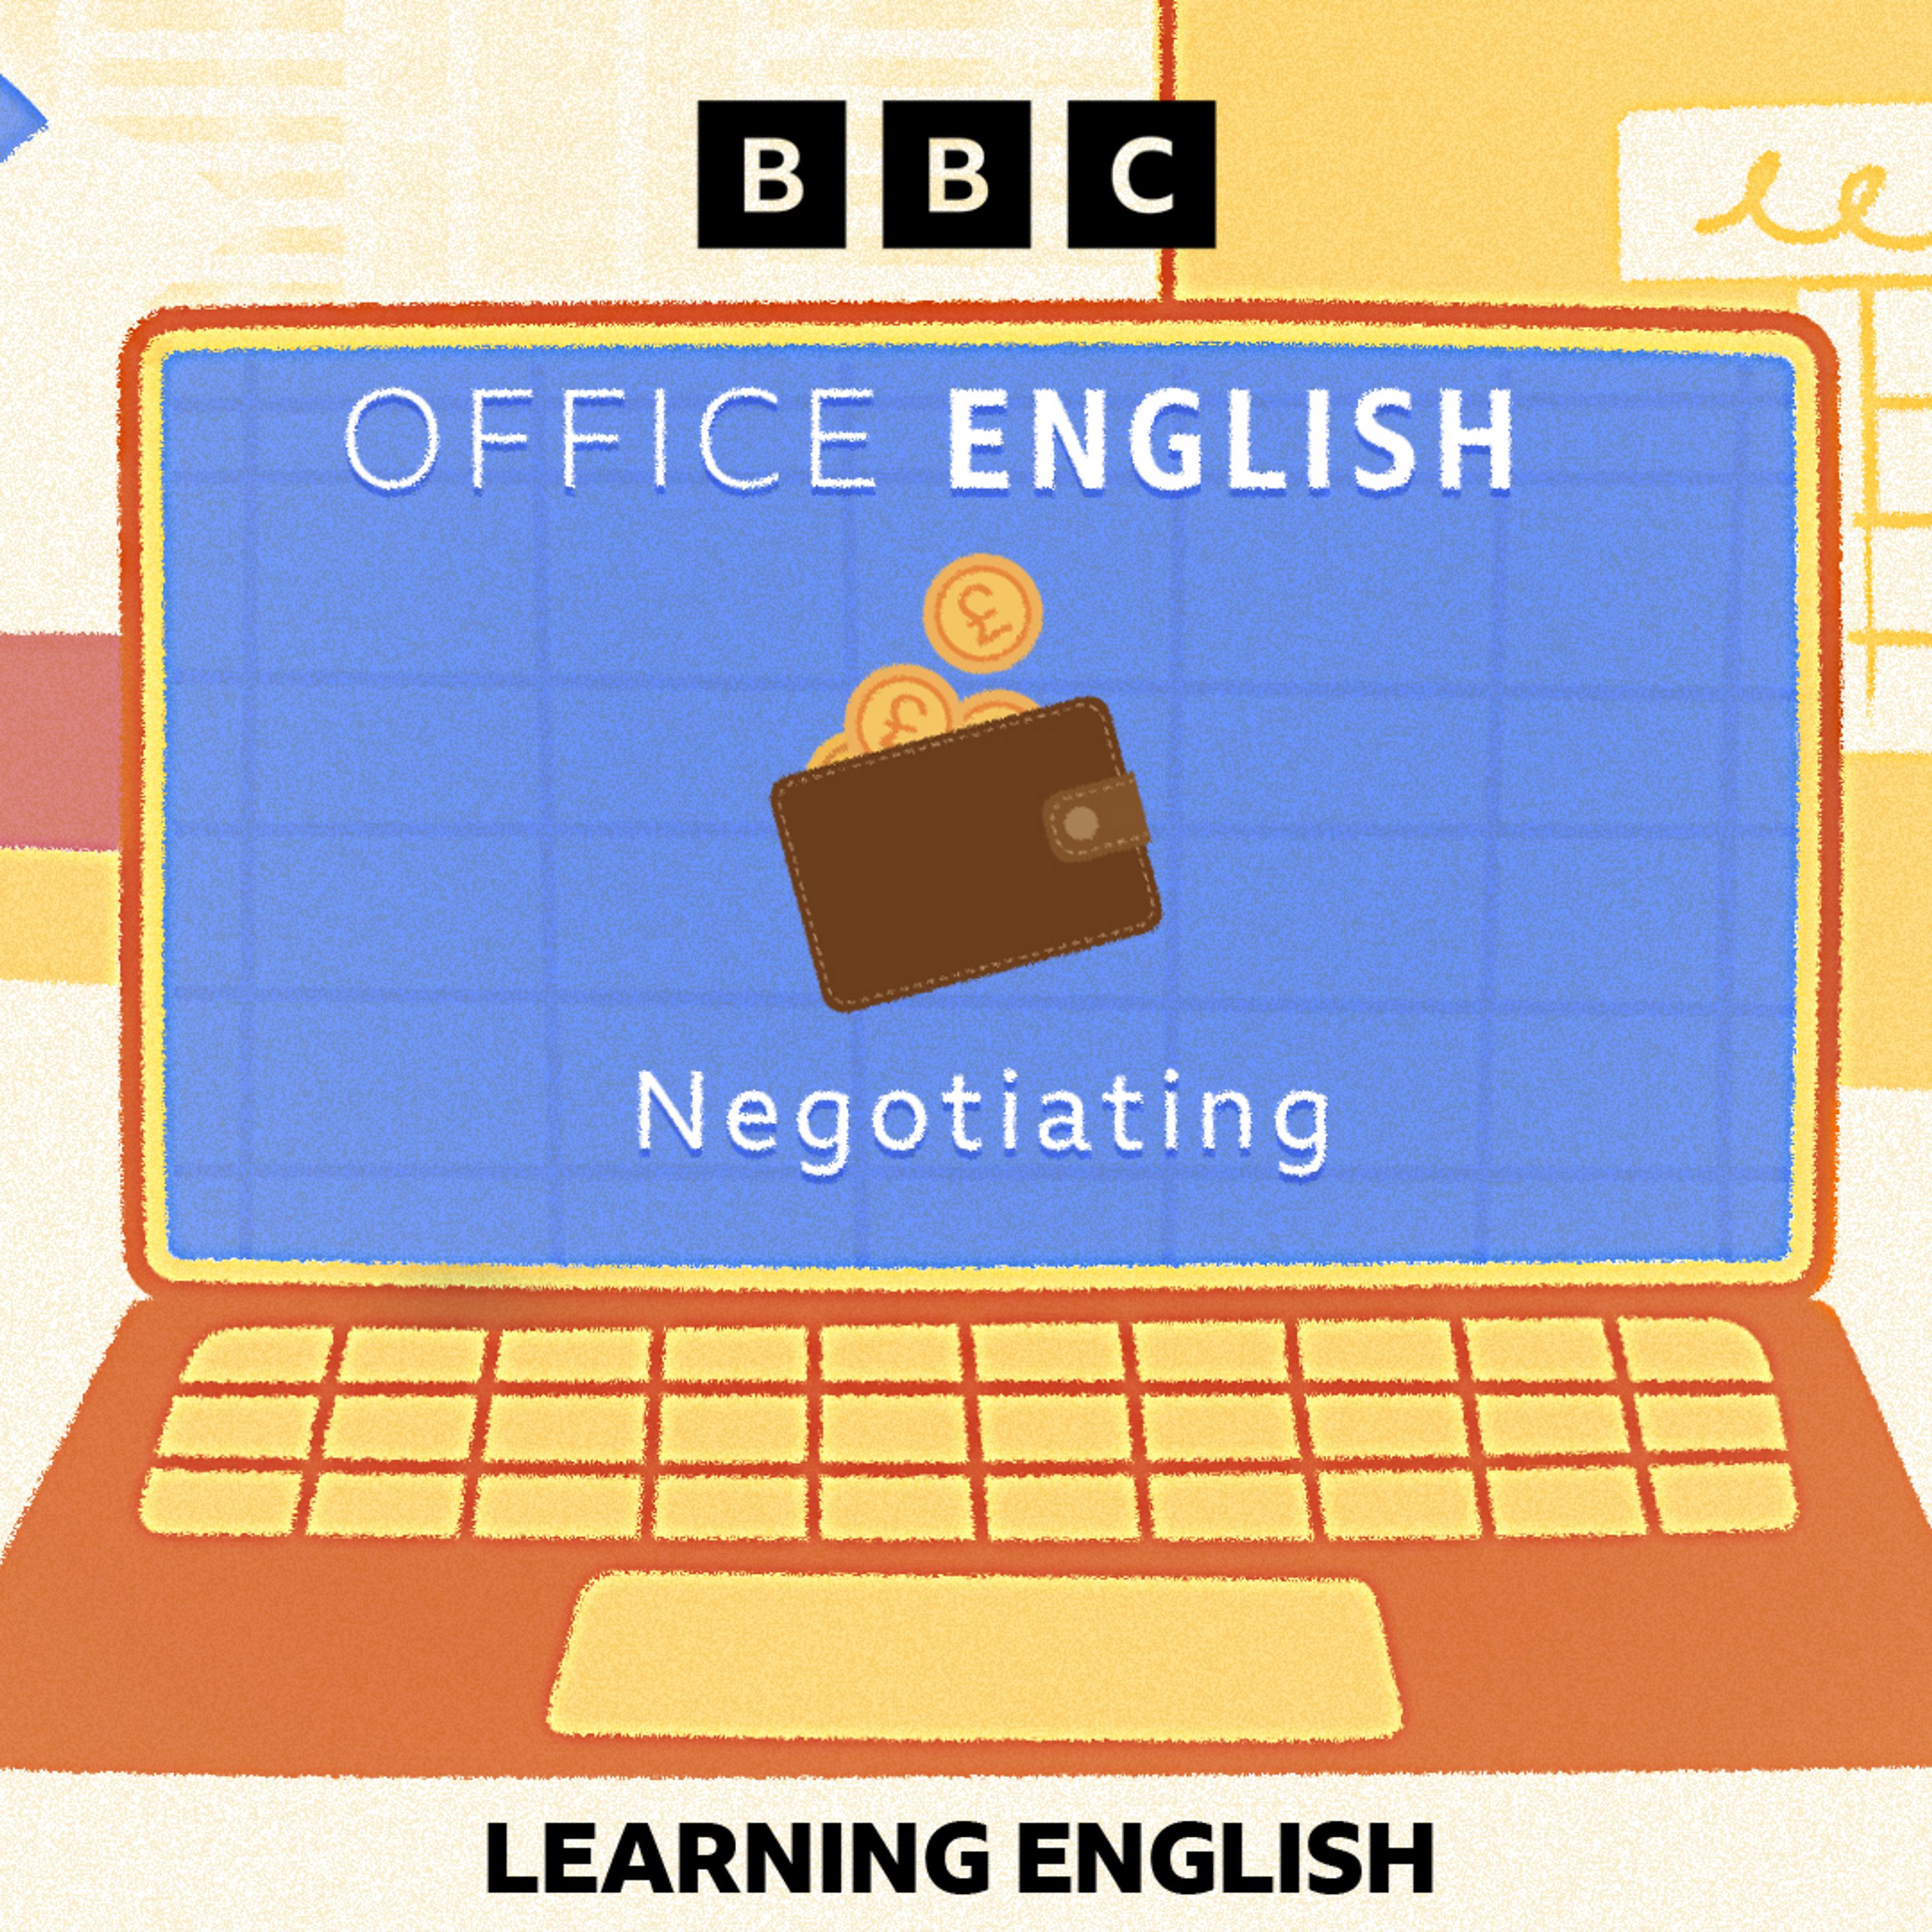 Office English: Negotiating